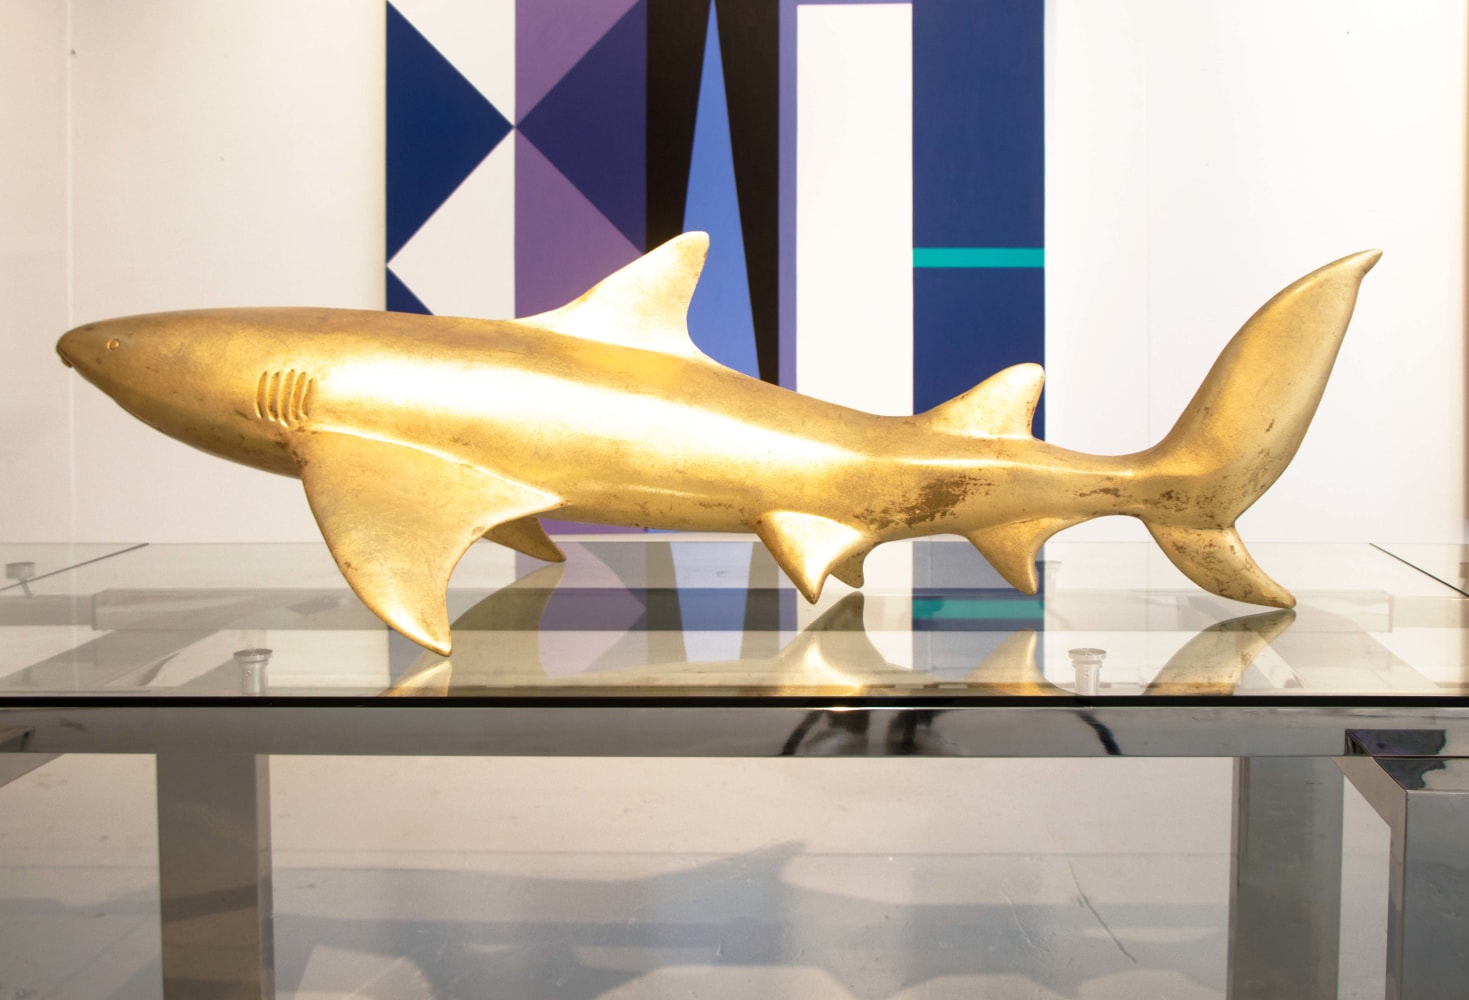 Hamilton Aguiar, Shark (Medium), 2015, Gold Leaf on Architectural Styrofoam, 18h x 60w x 25d inches